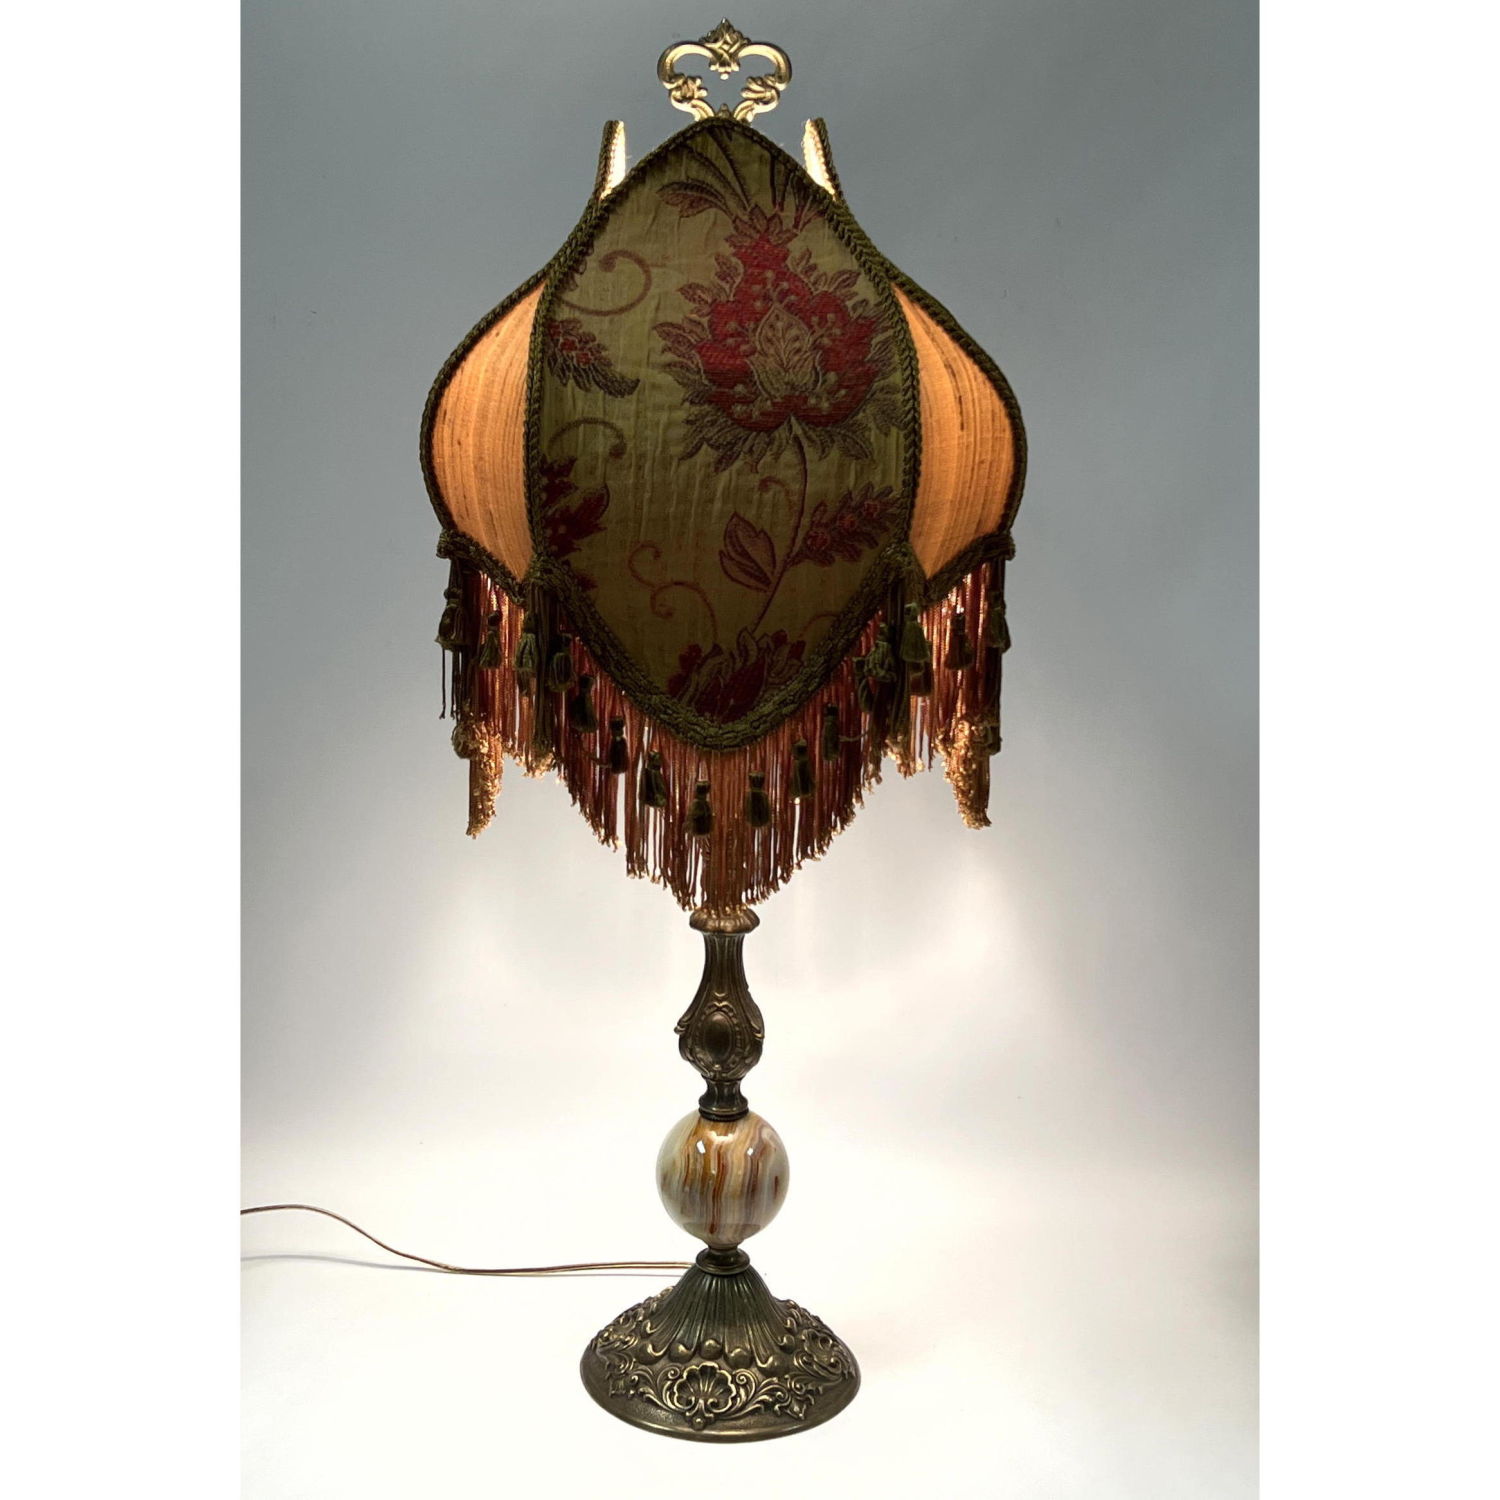 Decorative Metal Table Lamp Shell 2bac63